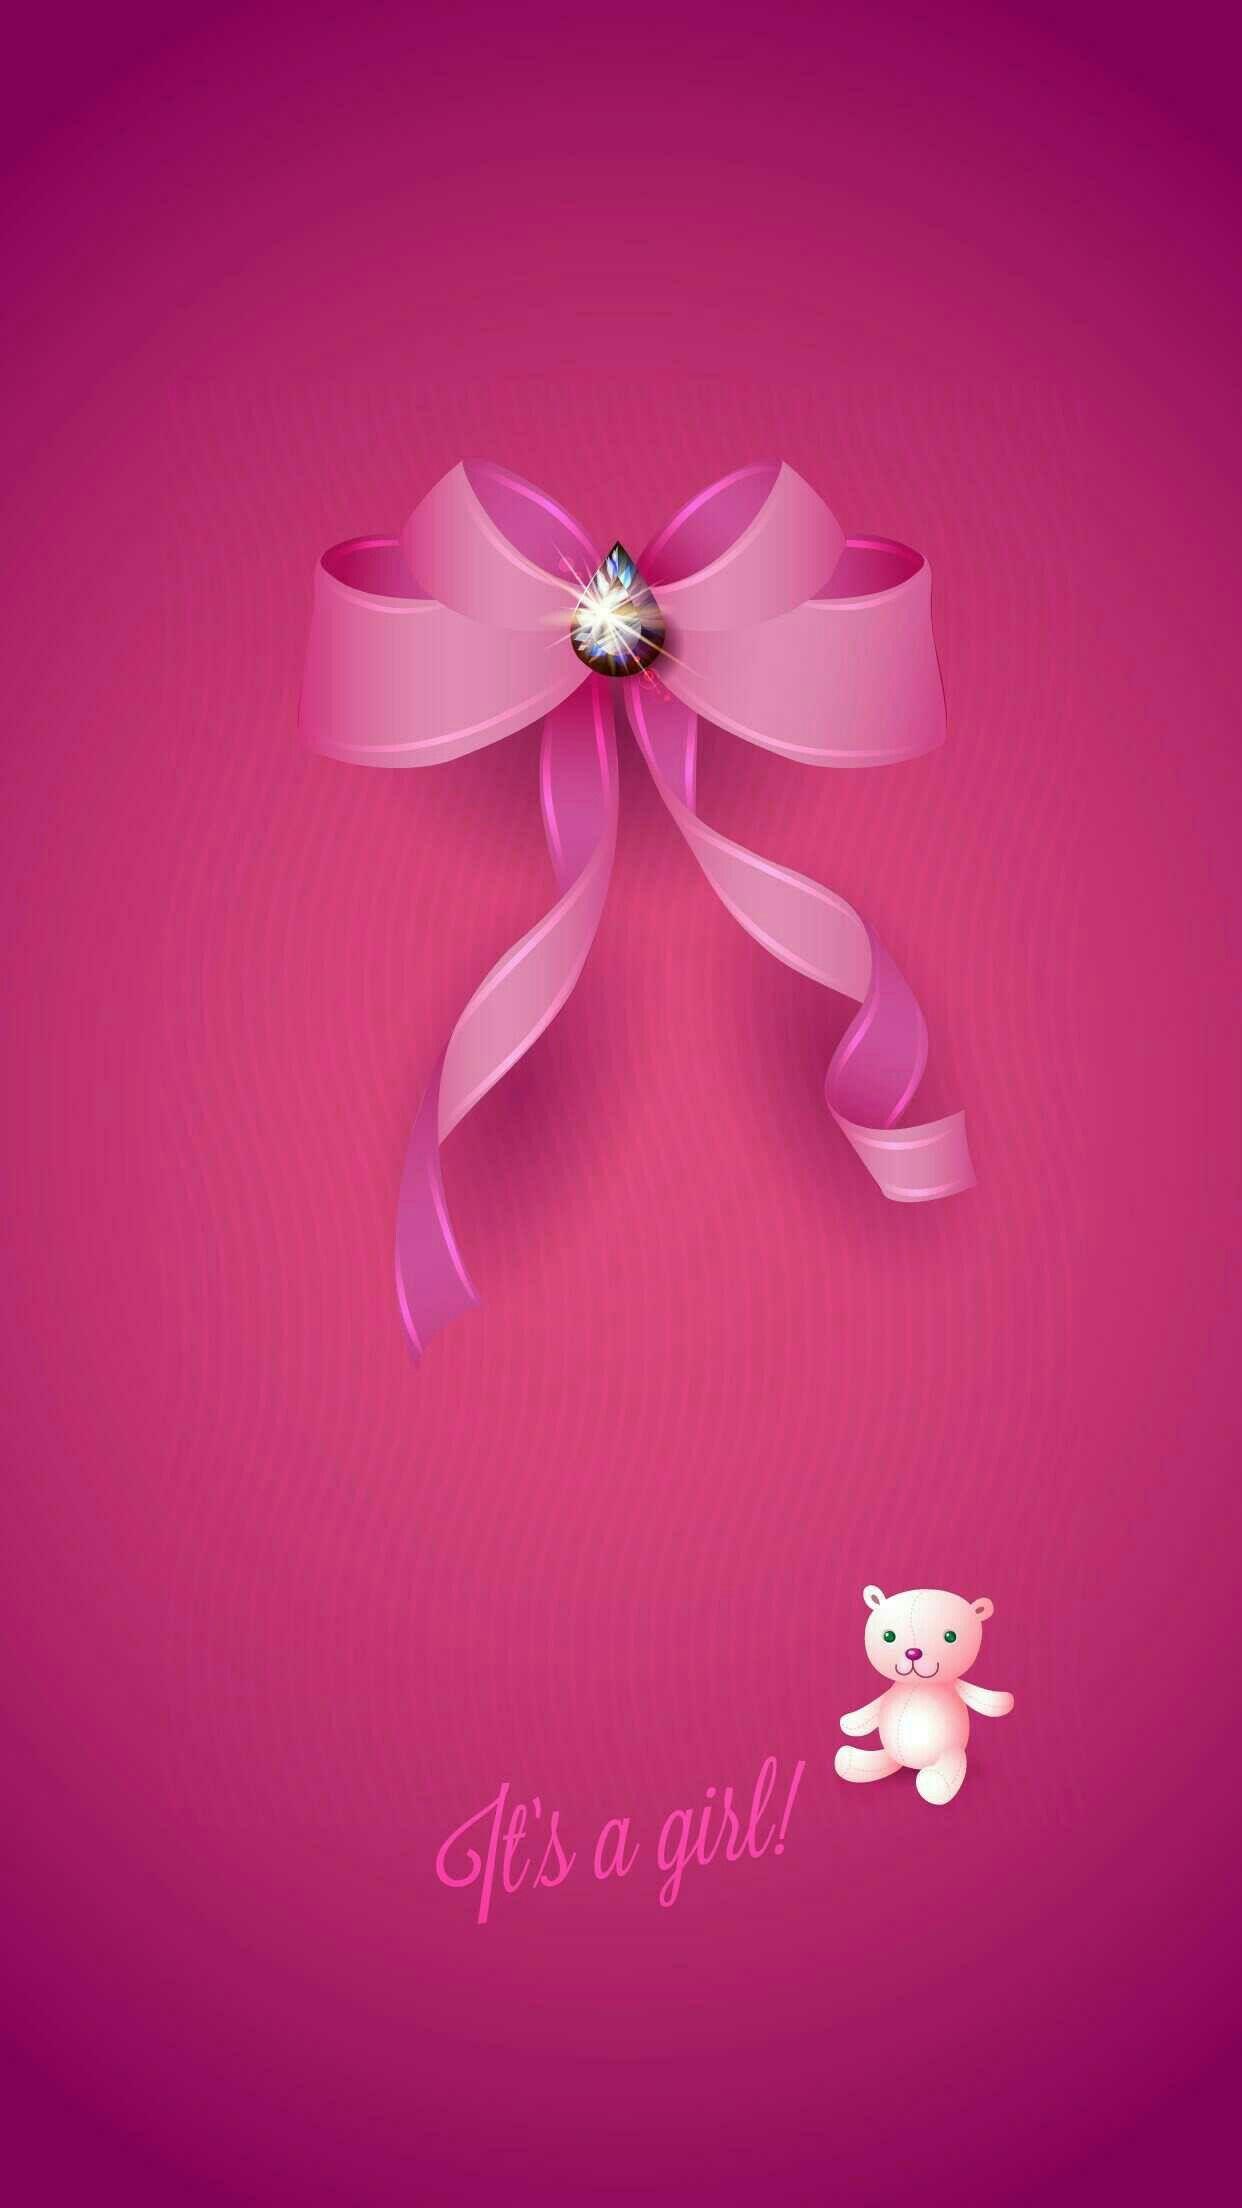 Free download Kawaii Kitty Pink Bow Wallpaper Kawaii Wallpapers 800x600  for your Desktop Mobile  Tablet  Explore 50 Cute Kawaii Wallpaper   Kawaii Wallpaper Kawaii Wallpapers Cute Kawaii Wallpapers